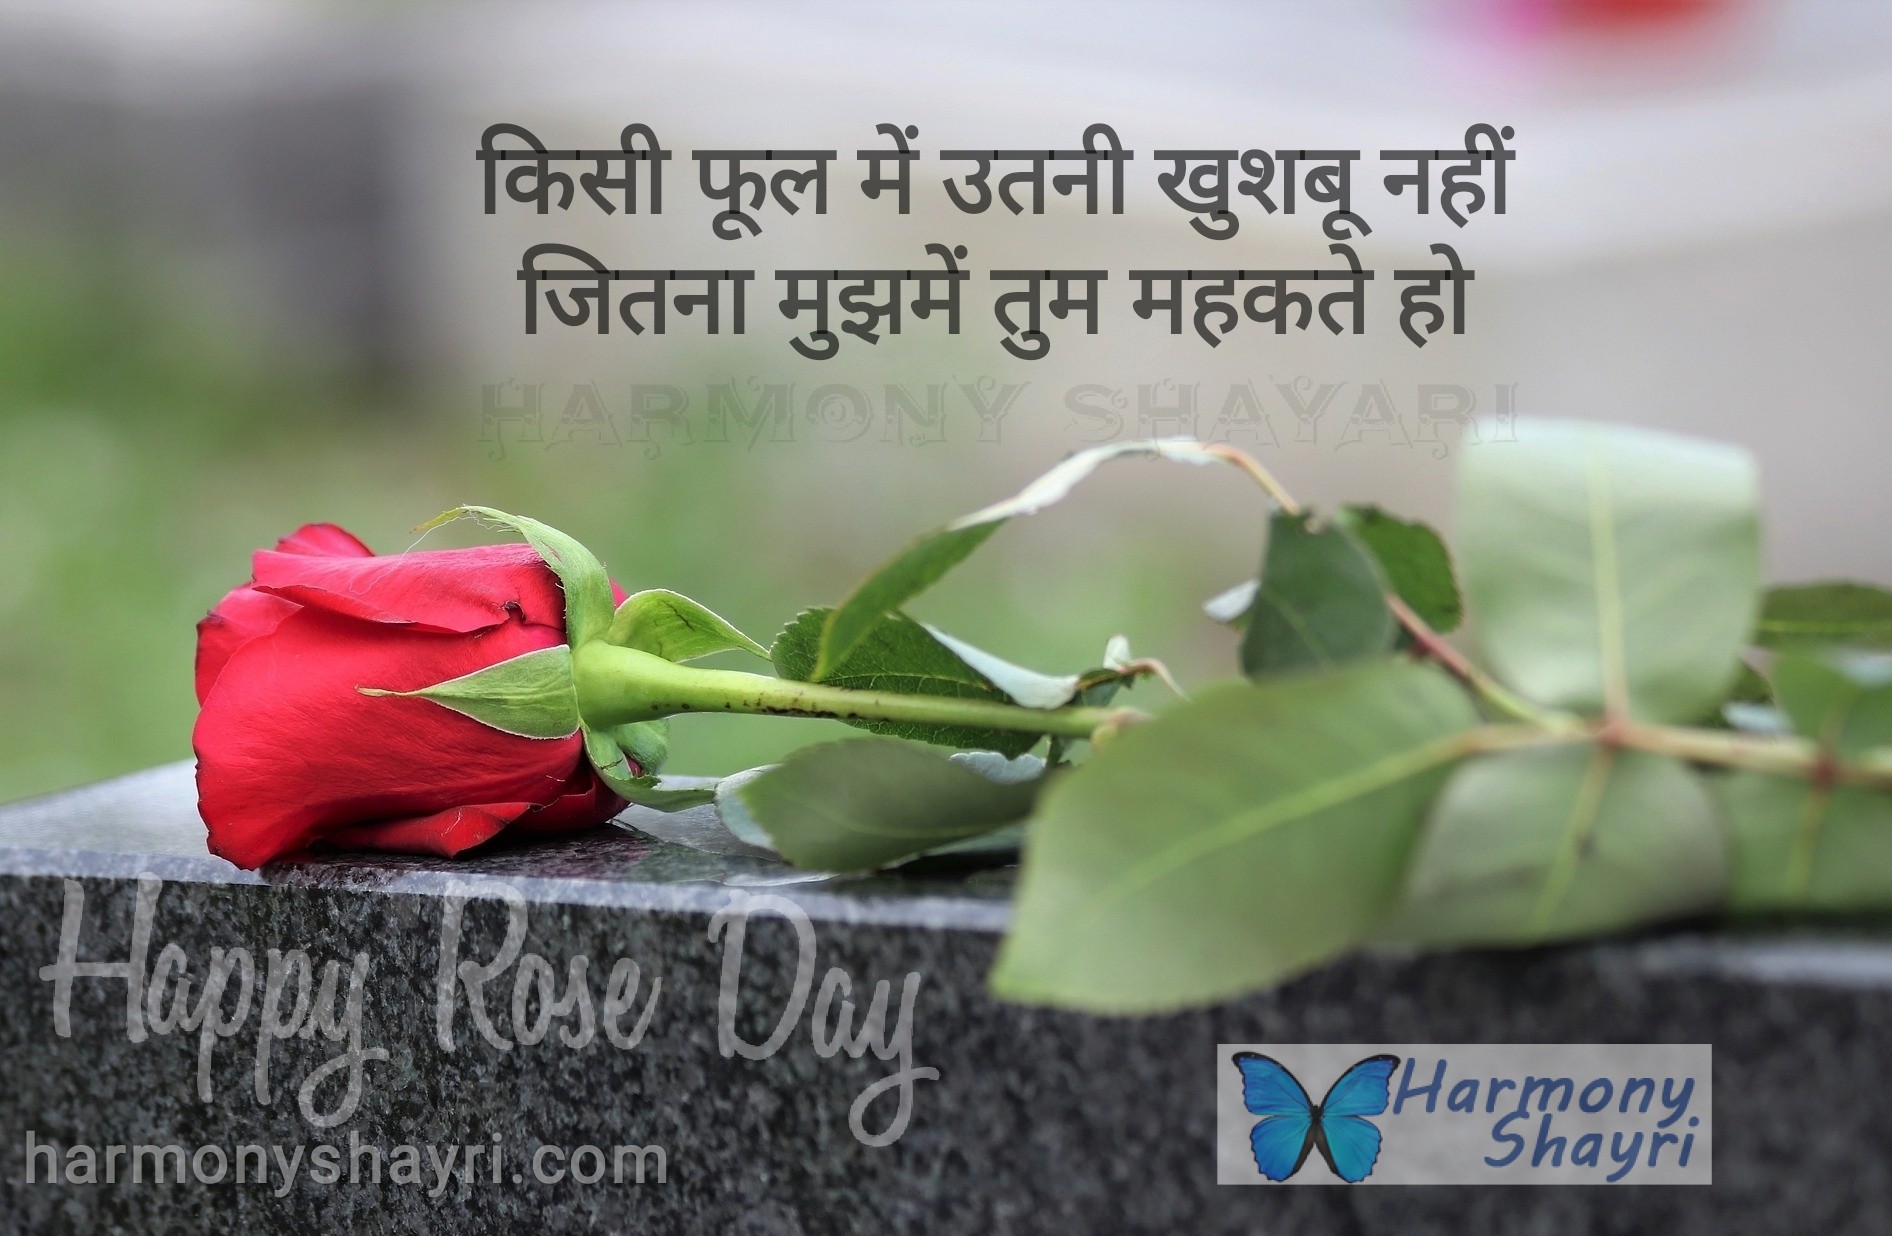 Kisi phool mein utni khushboo nahi – Happy Rose Day